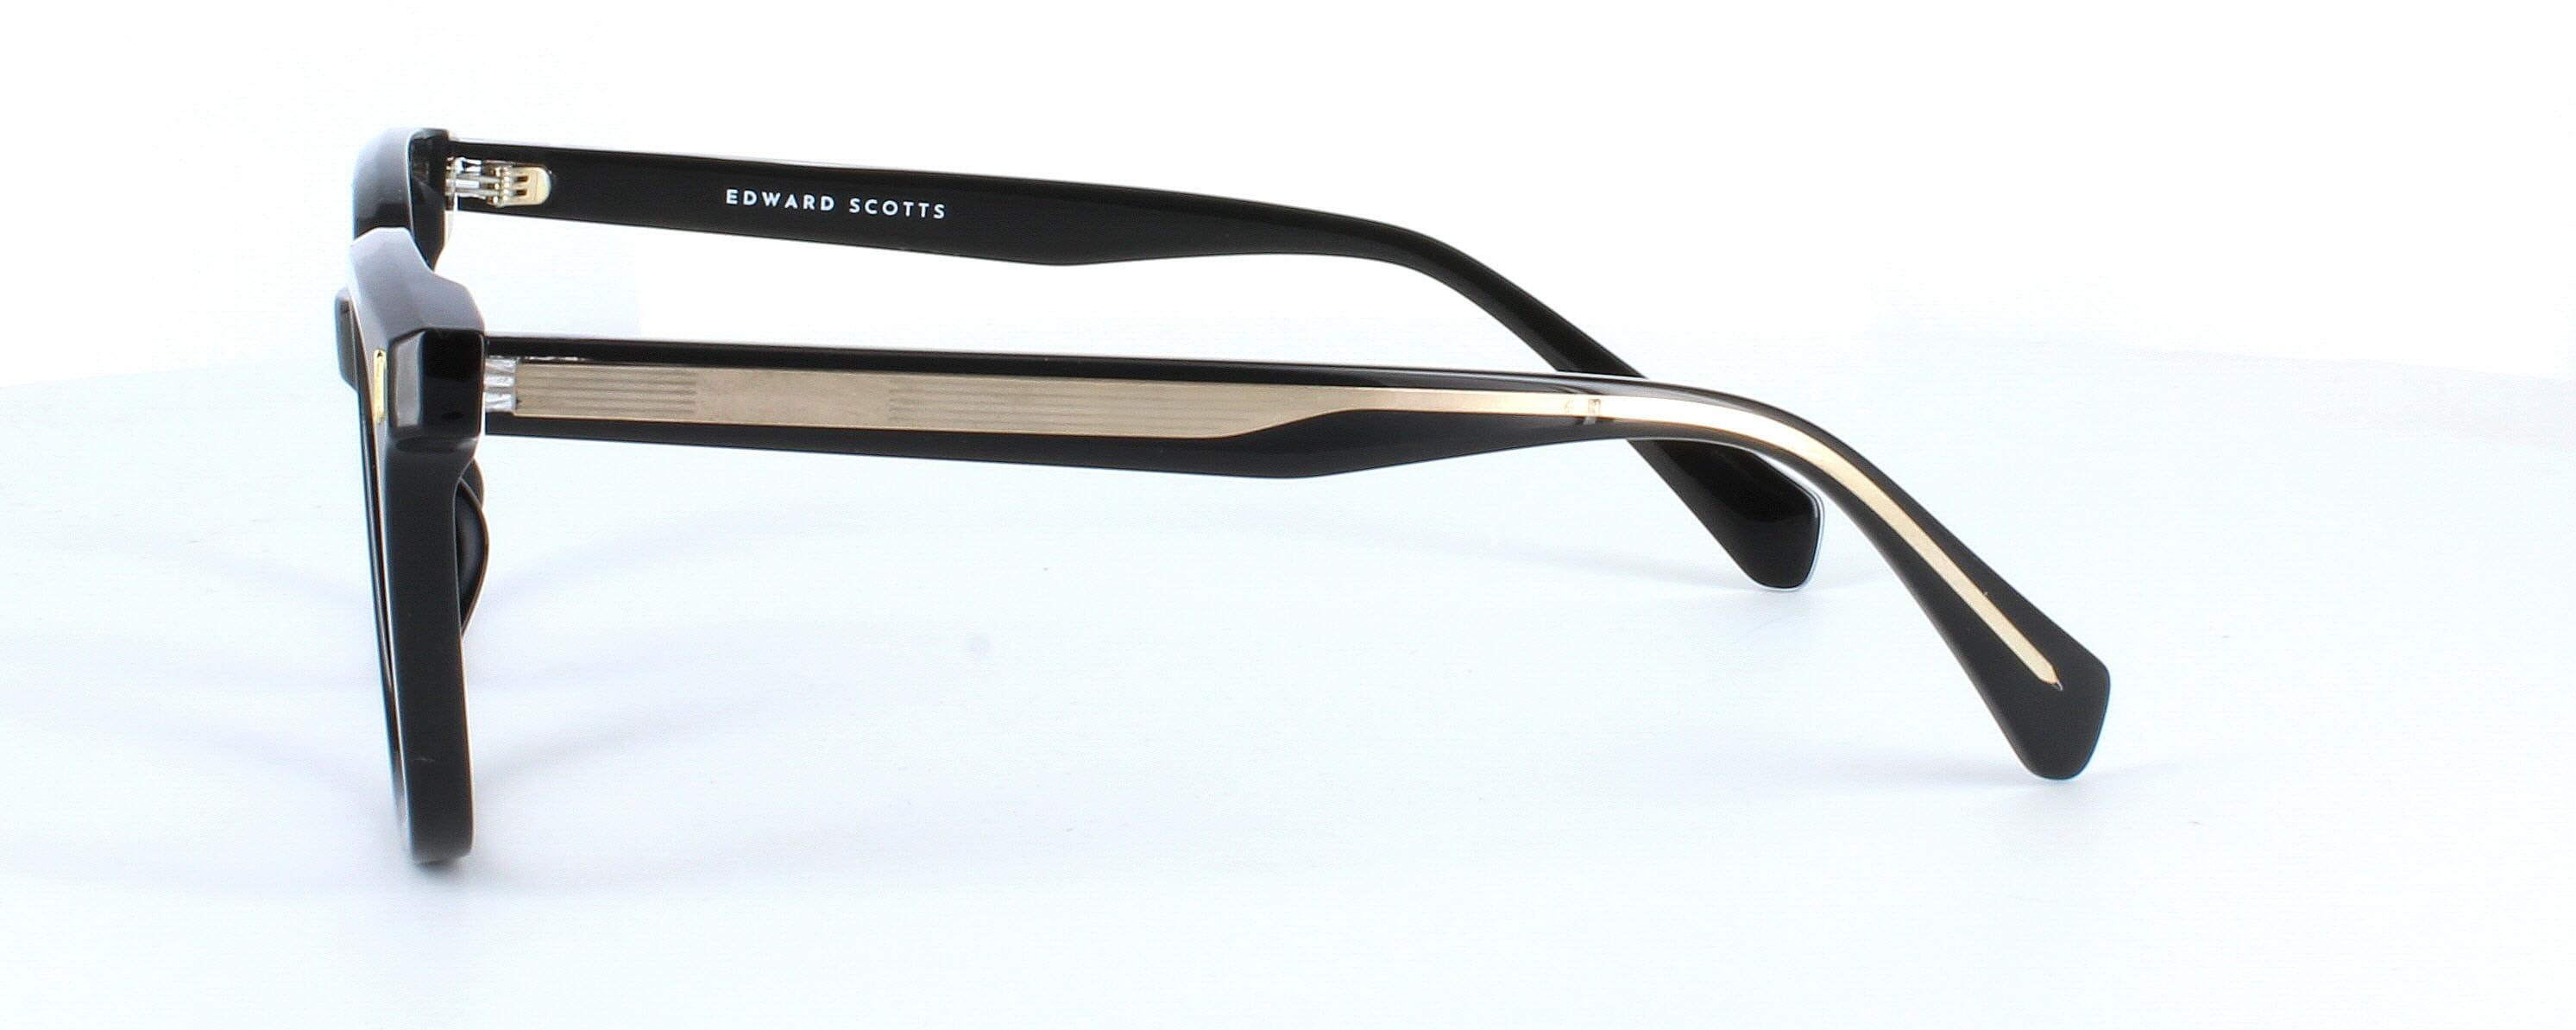 Edward Scotts TRBC901 - Black - Unisex acetate retro style glasses frame with square shaped lenses - image view 3